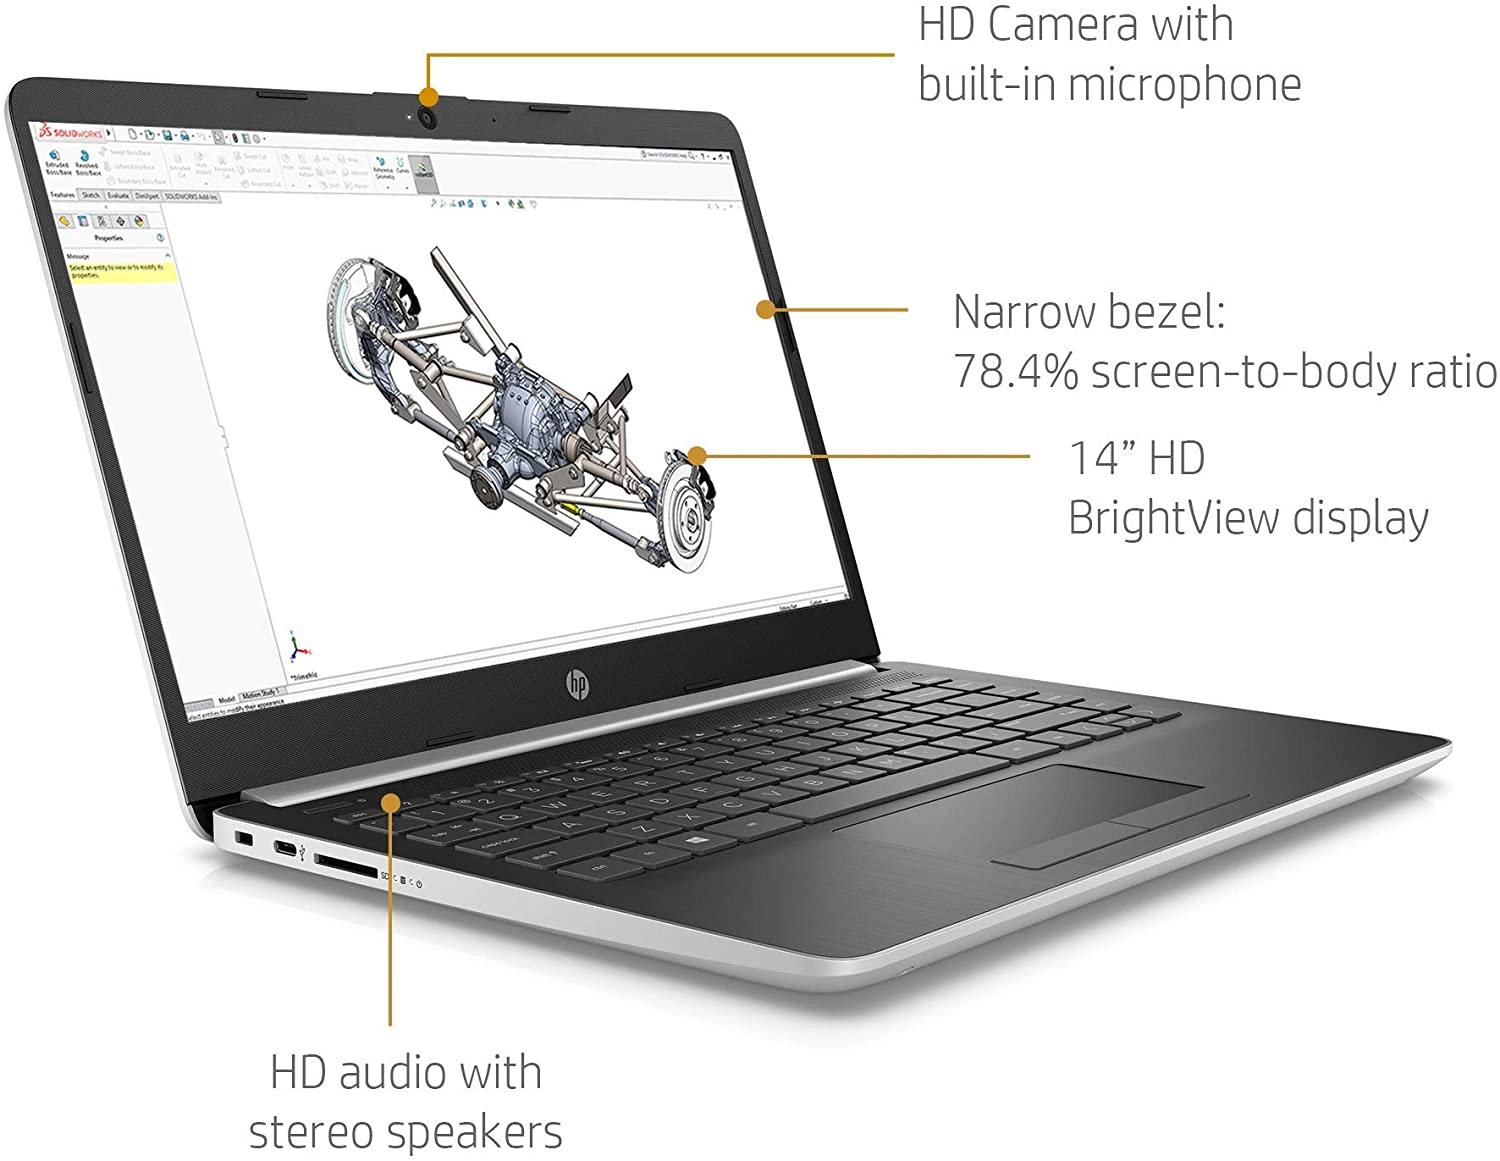 HP Notebook laptop image